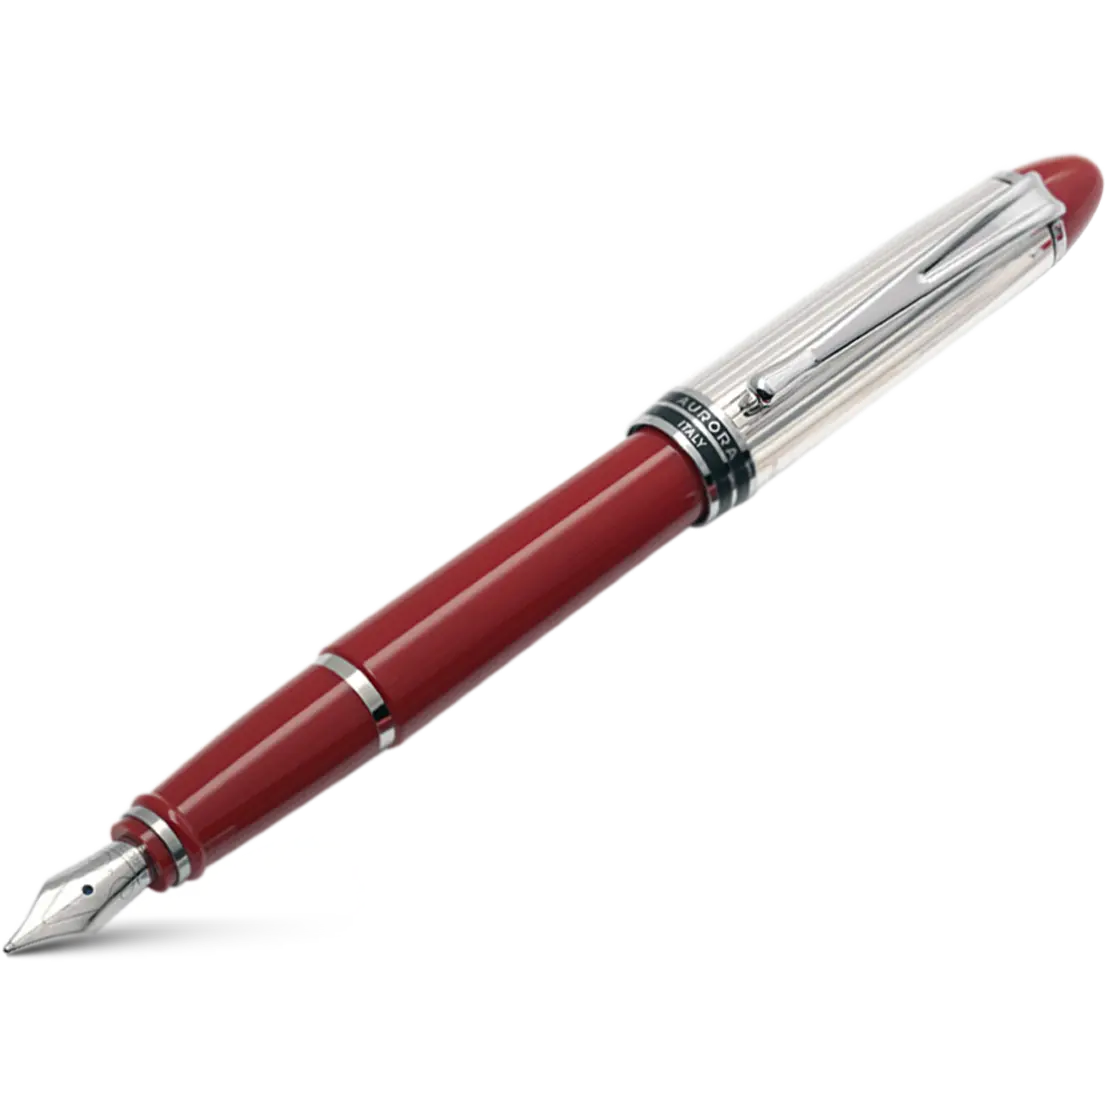 Aurora Fountain Pen - Red - Sterling Silver-Pen Boutique Ltd